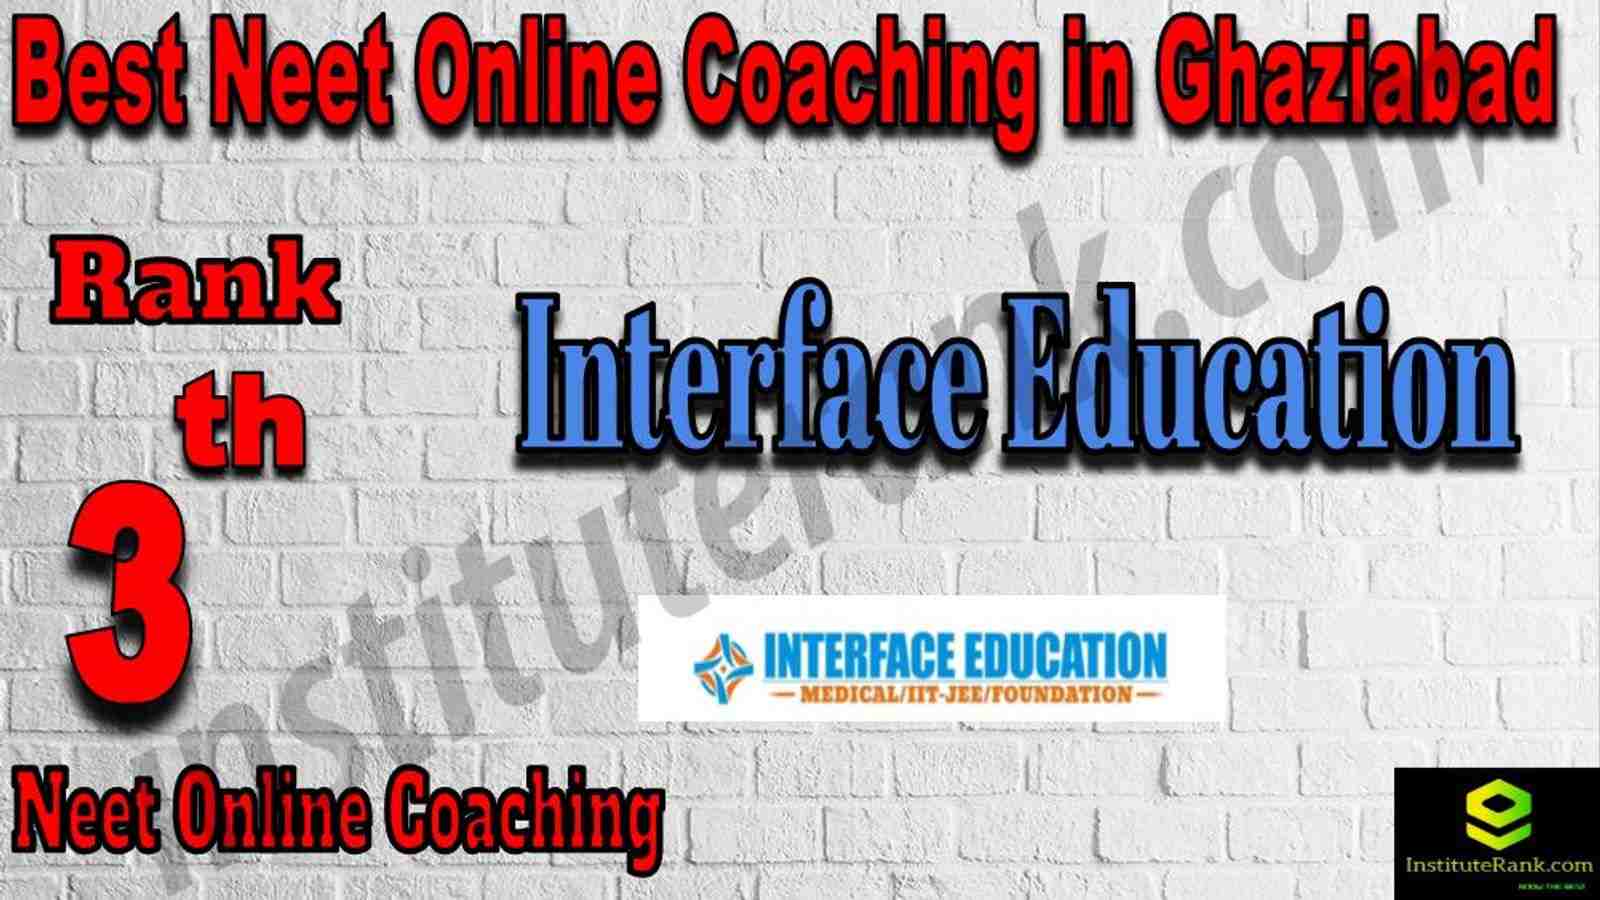 3rd Best Neet Online Coaching in Ghaziabad